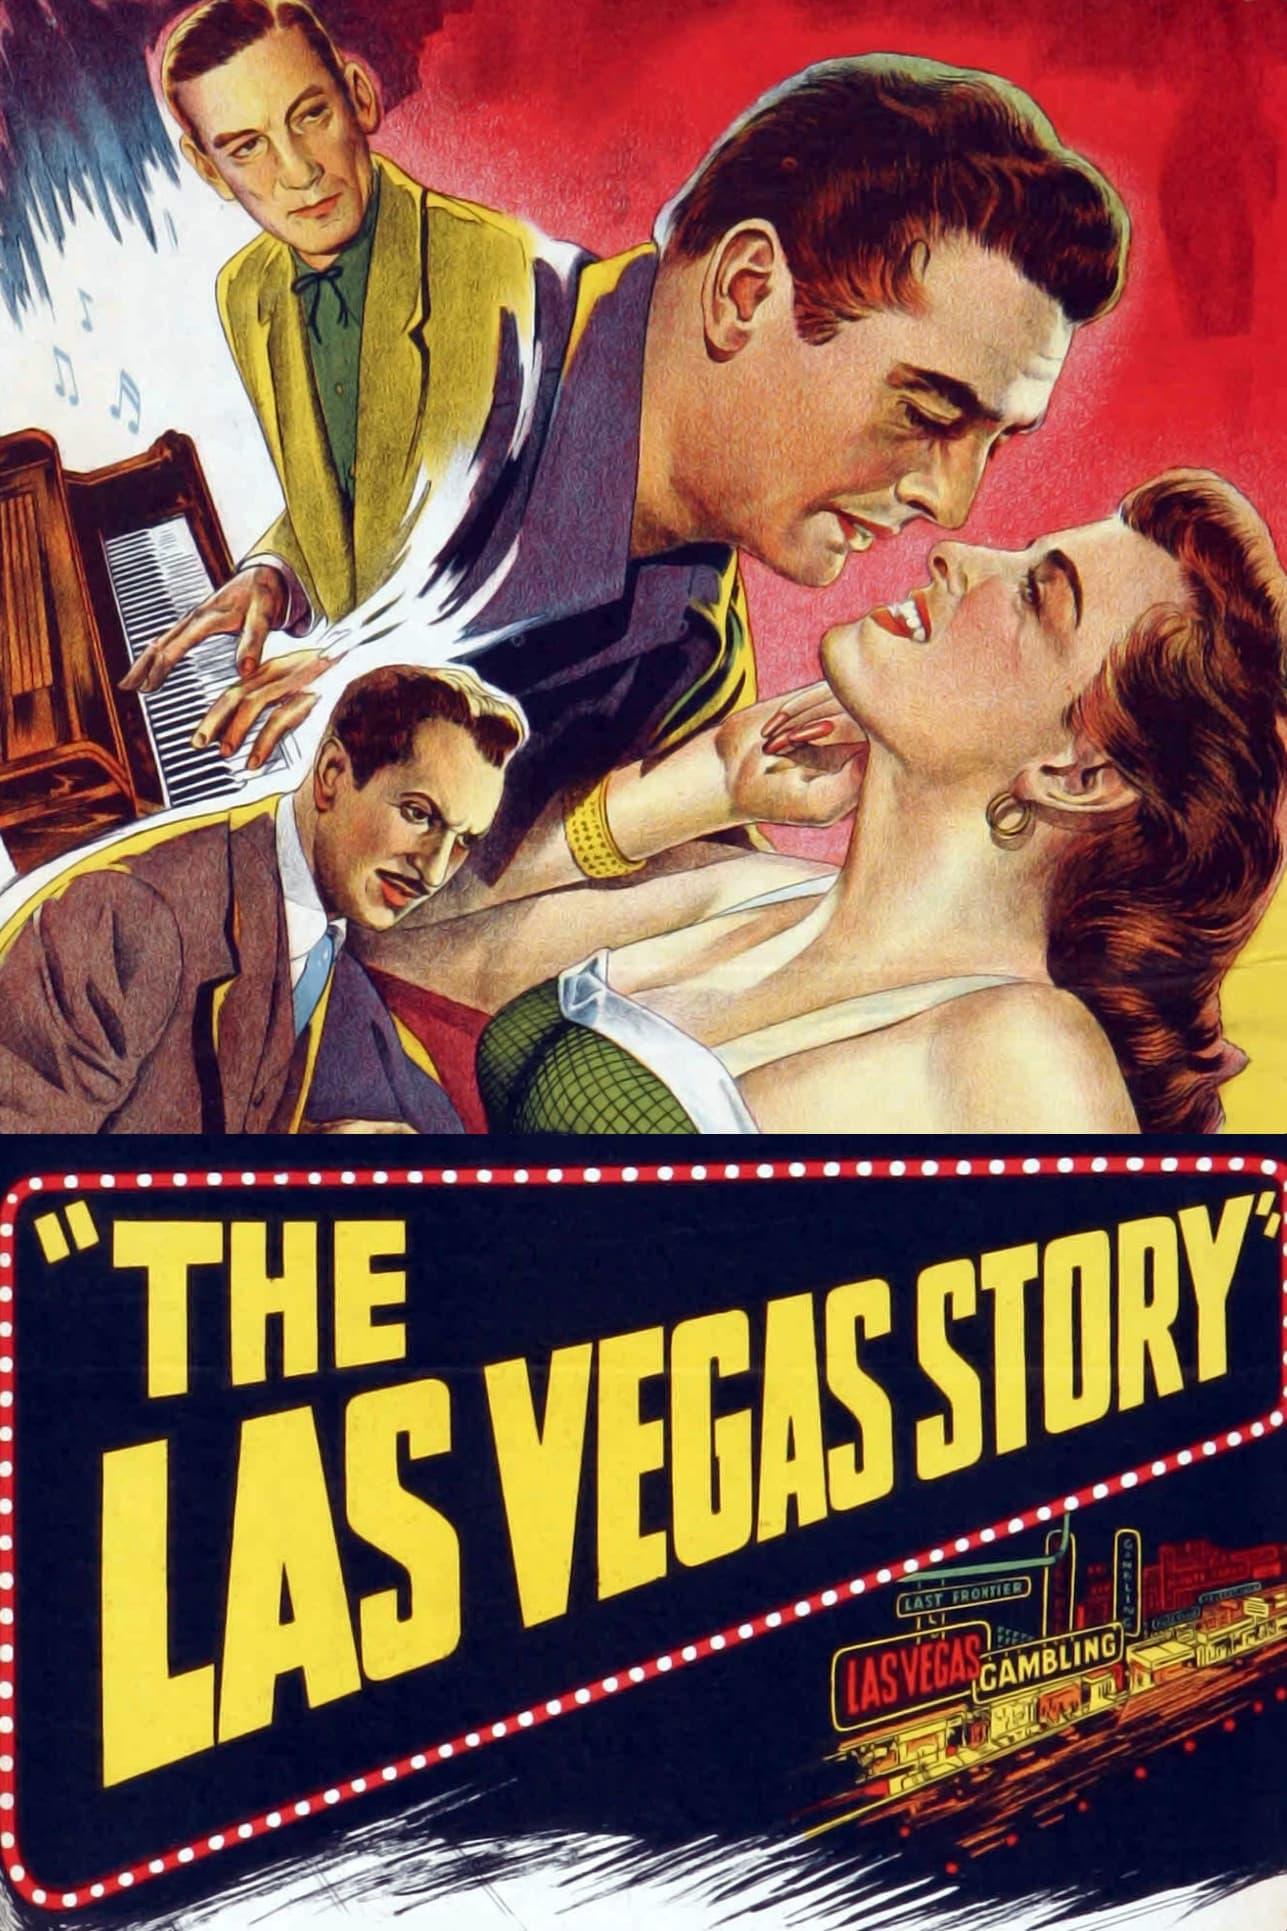 The Las Vegas Story poster